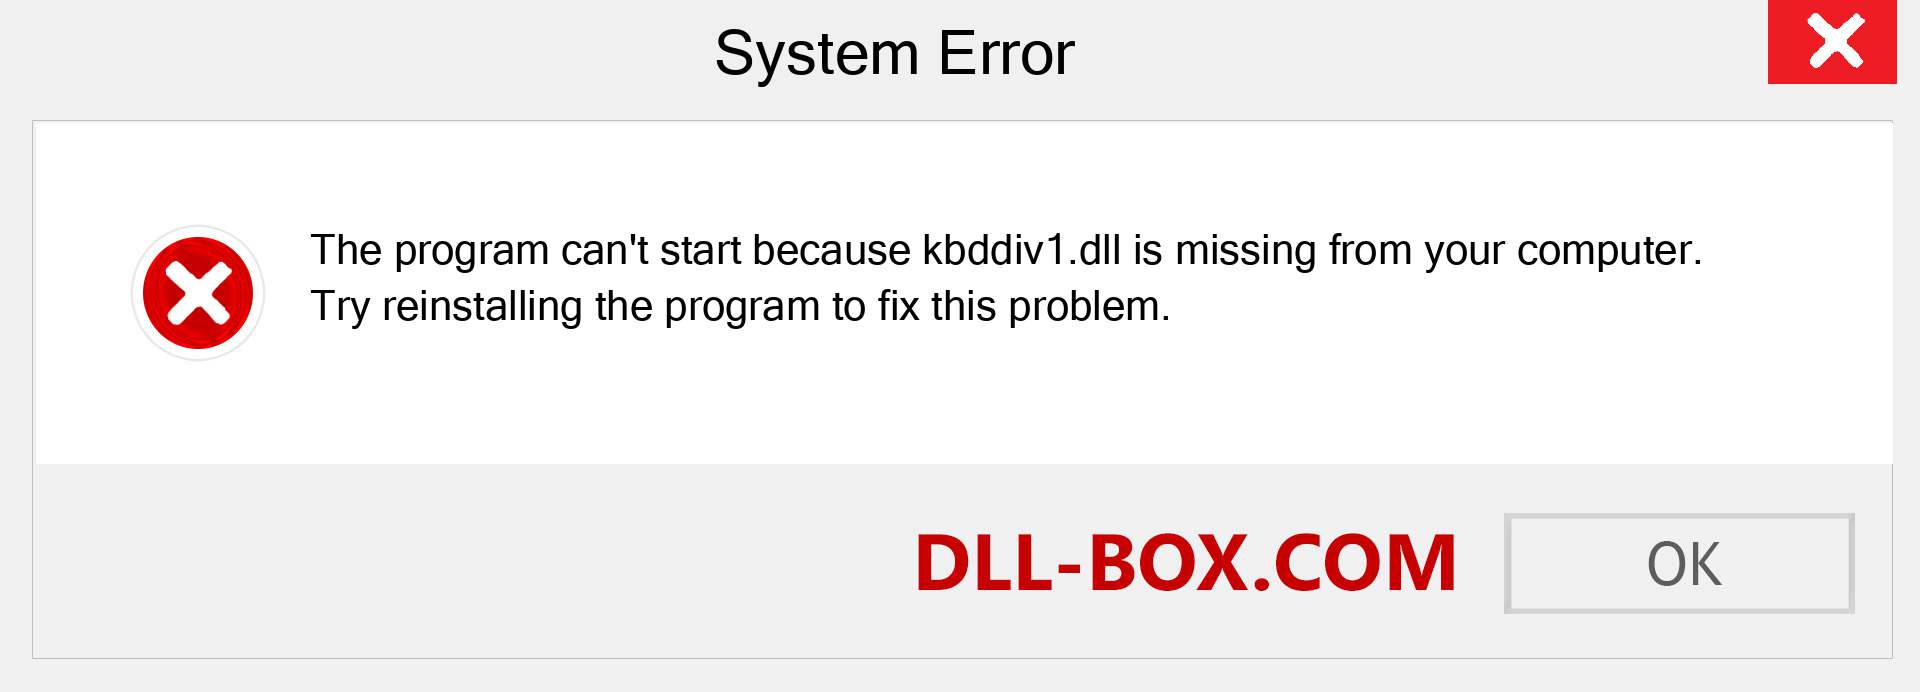  kbddiv1.dll file is missing?. Download for Windows 7, 8, 10 - Fix  kbddiv1 dll Missing Error on Windows, photos, images